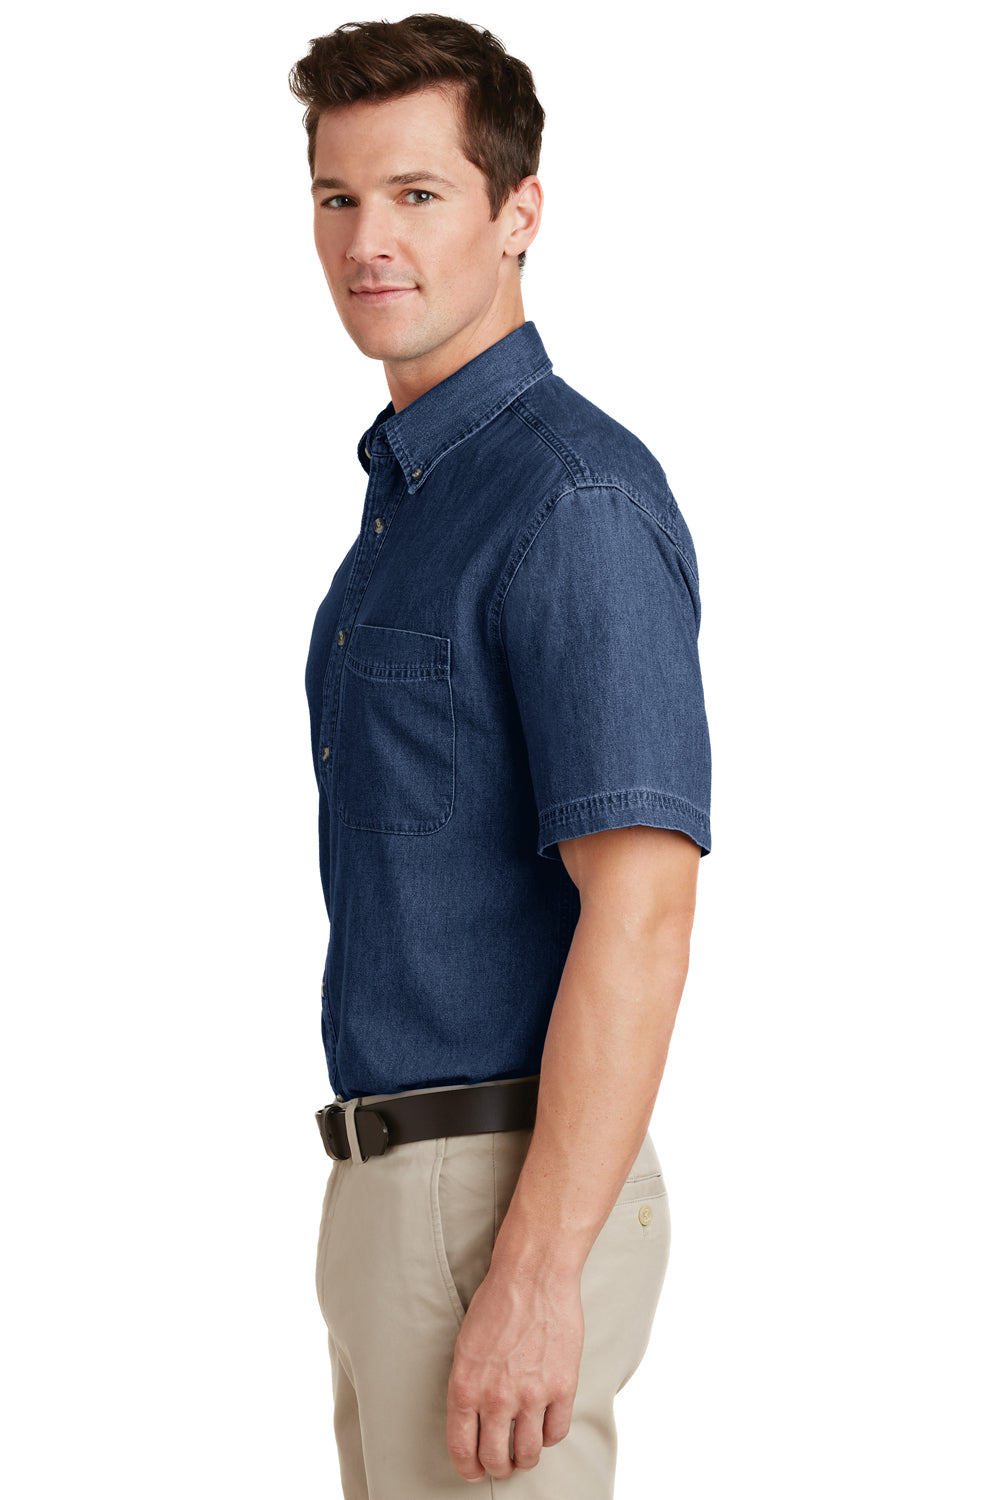 Port & Company SP11 Mens Denim Short Sleeve Button Down Shirt w/ Pocket Ink Blue Side